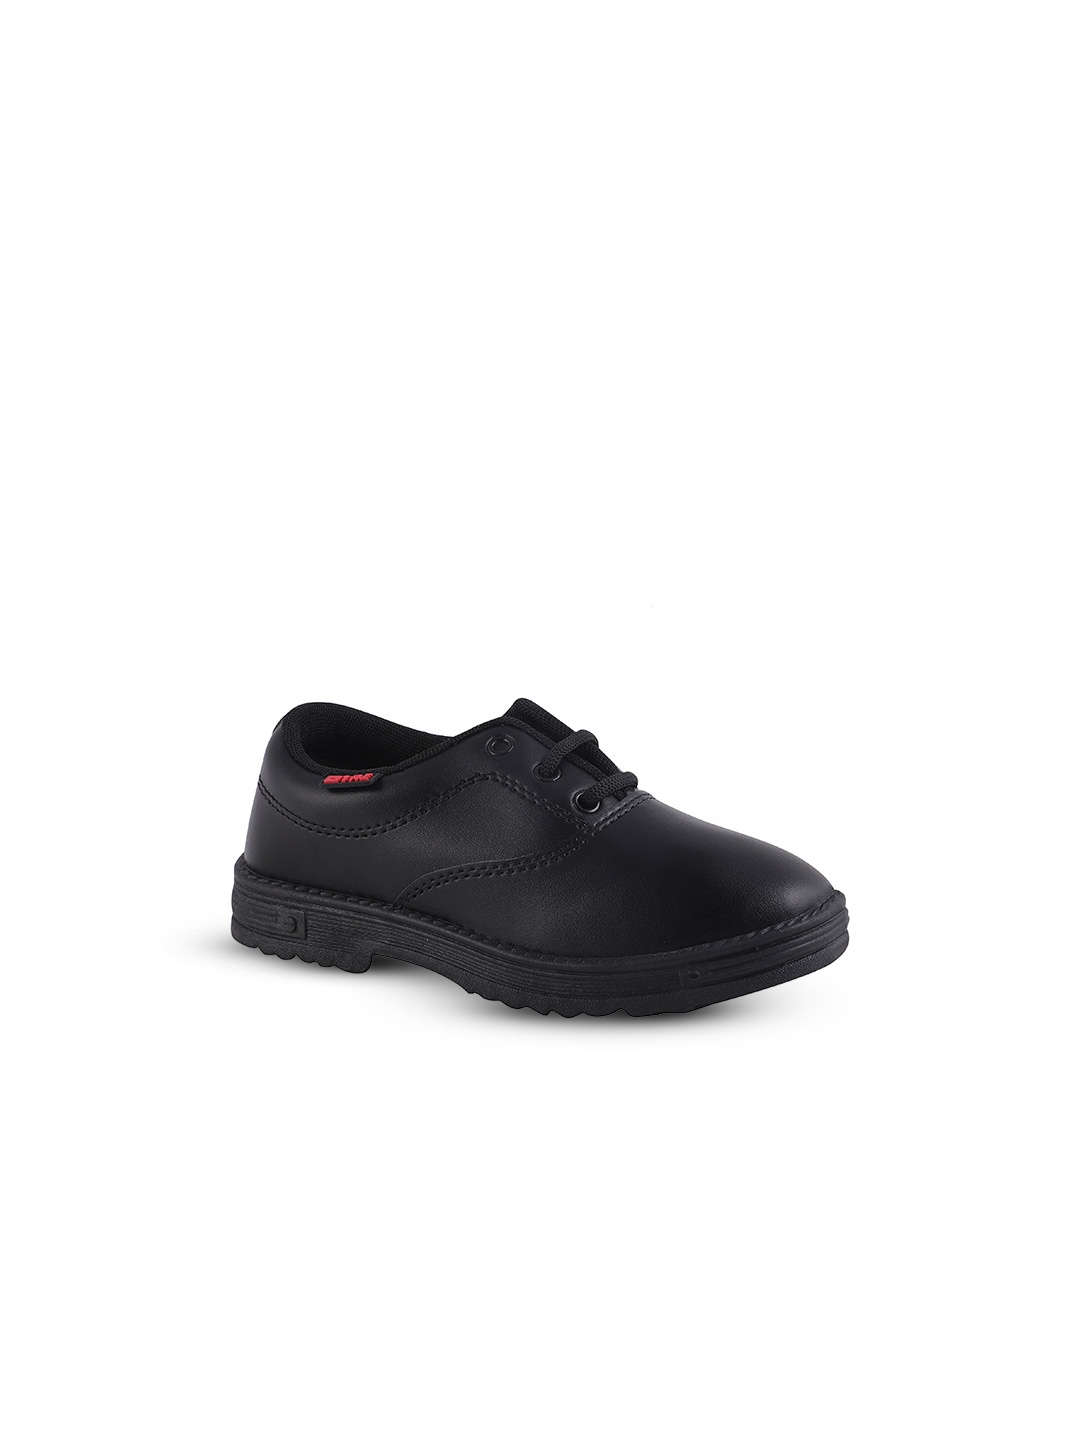 

BAESD Boys Comfort Insole Lightweight Sneakers, Black